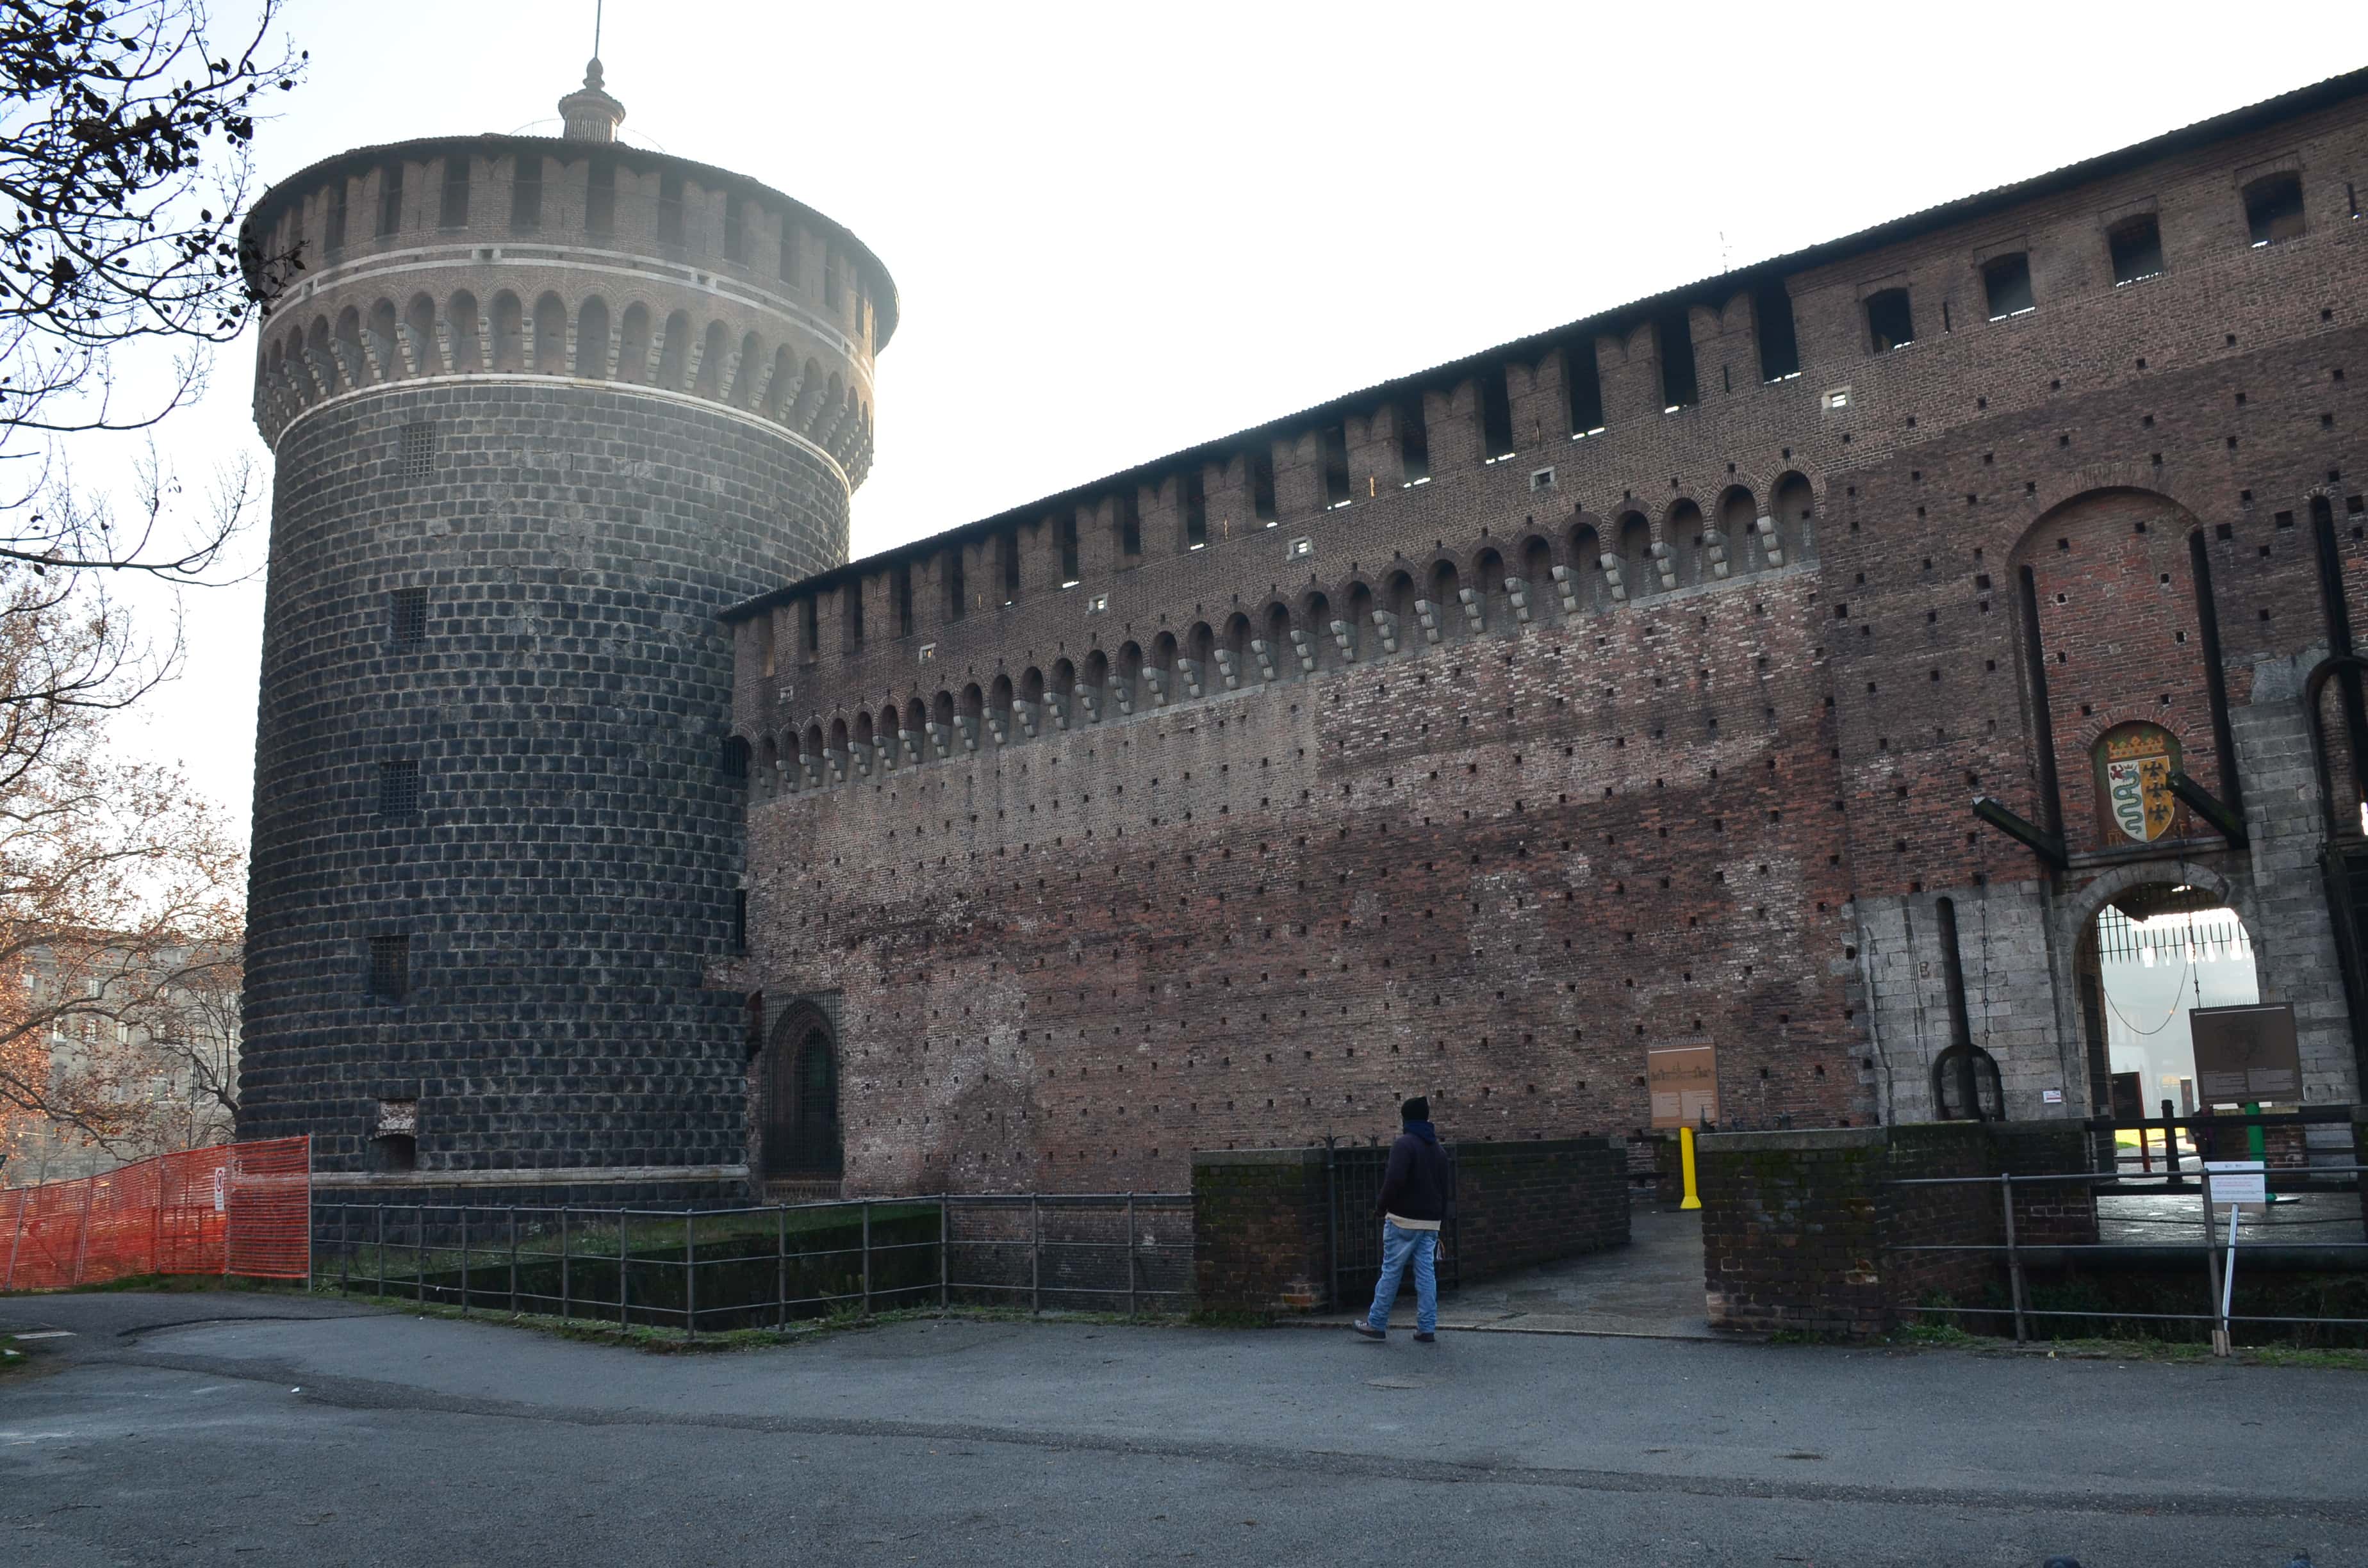 Carmine Tower at Sforza Castle in Milan, Italy